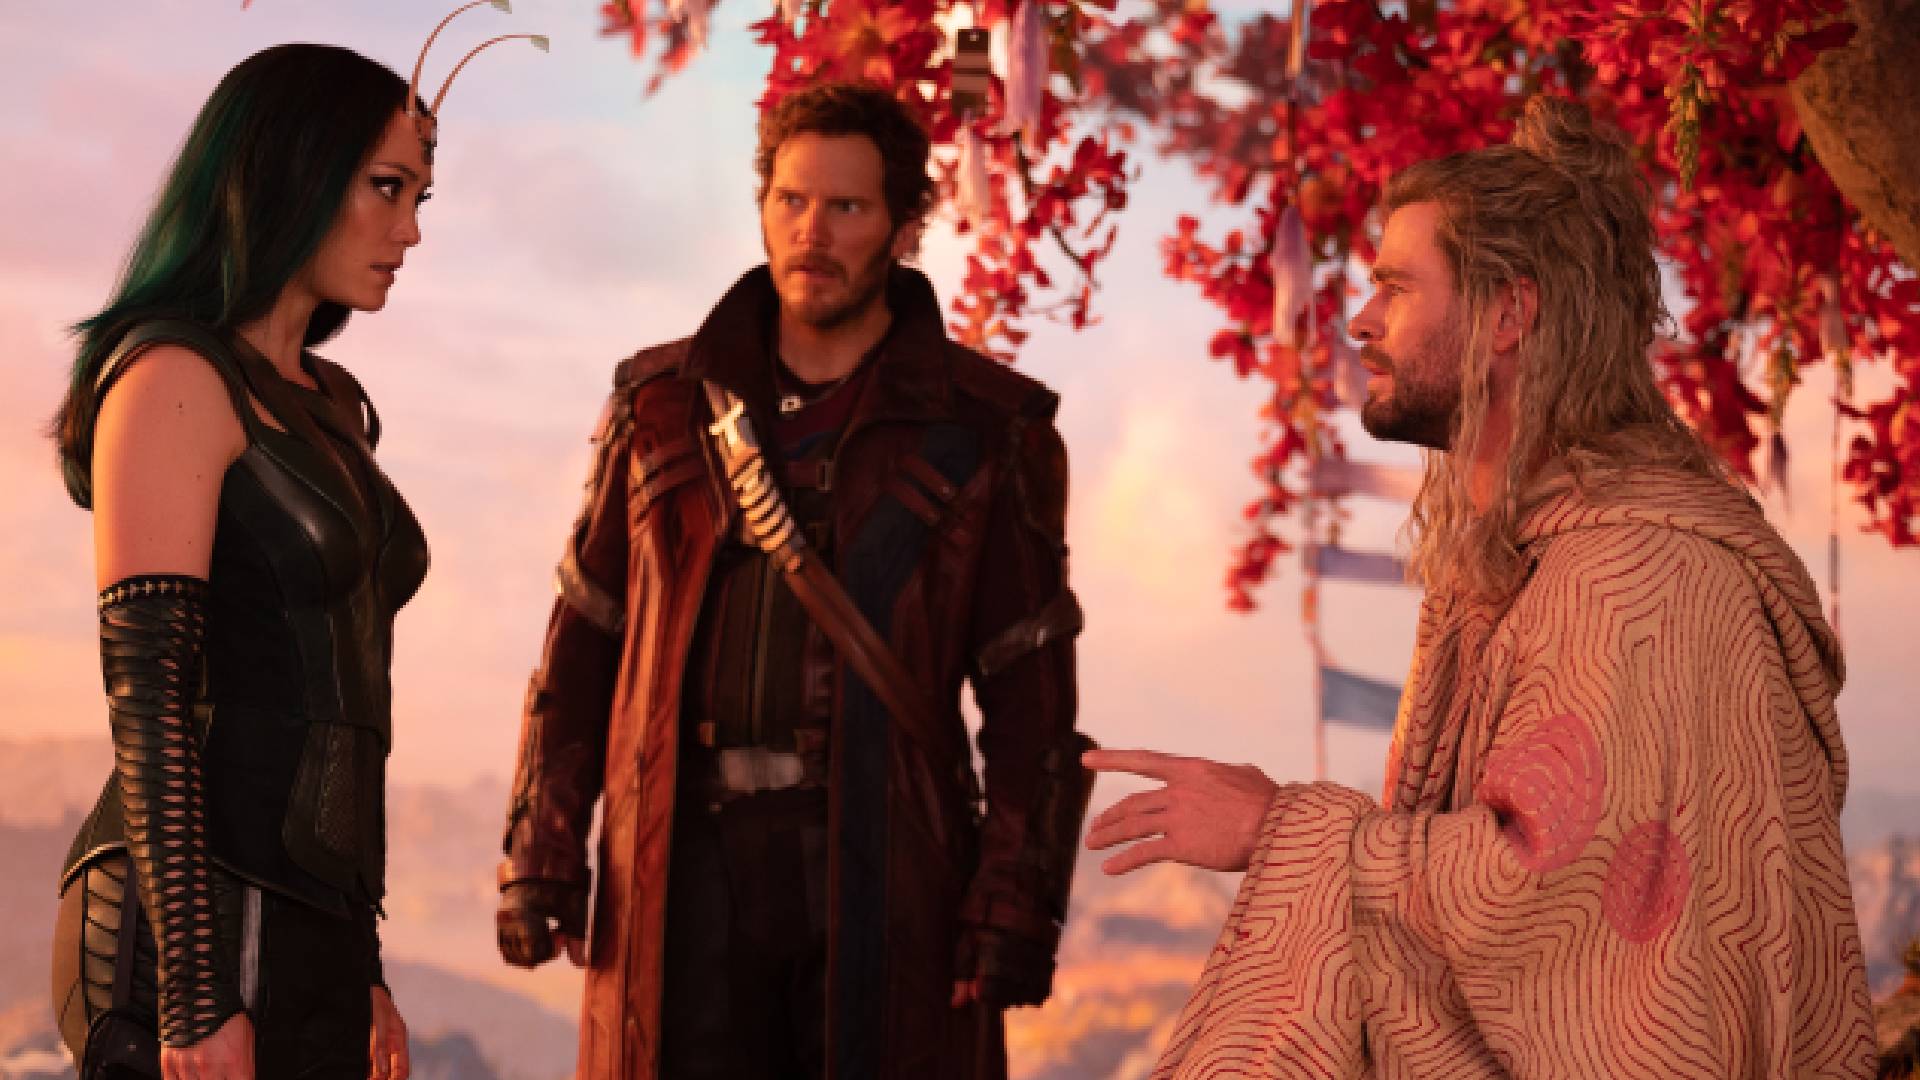 Thor: Ragnarok's Jeff Goldblum didn't hint at Love & Thunder return